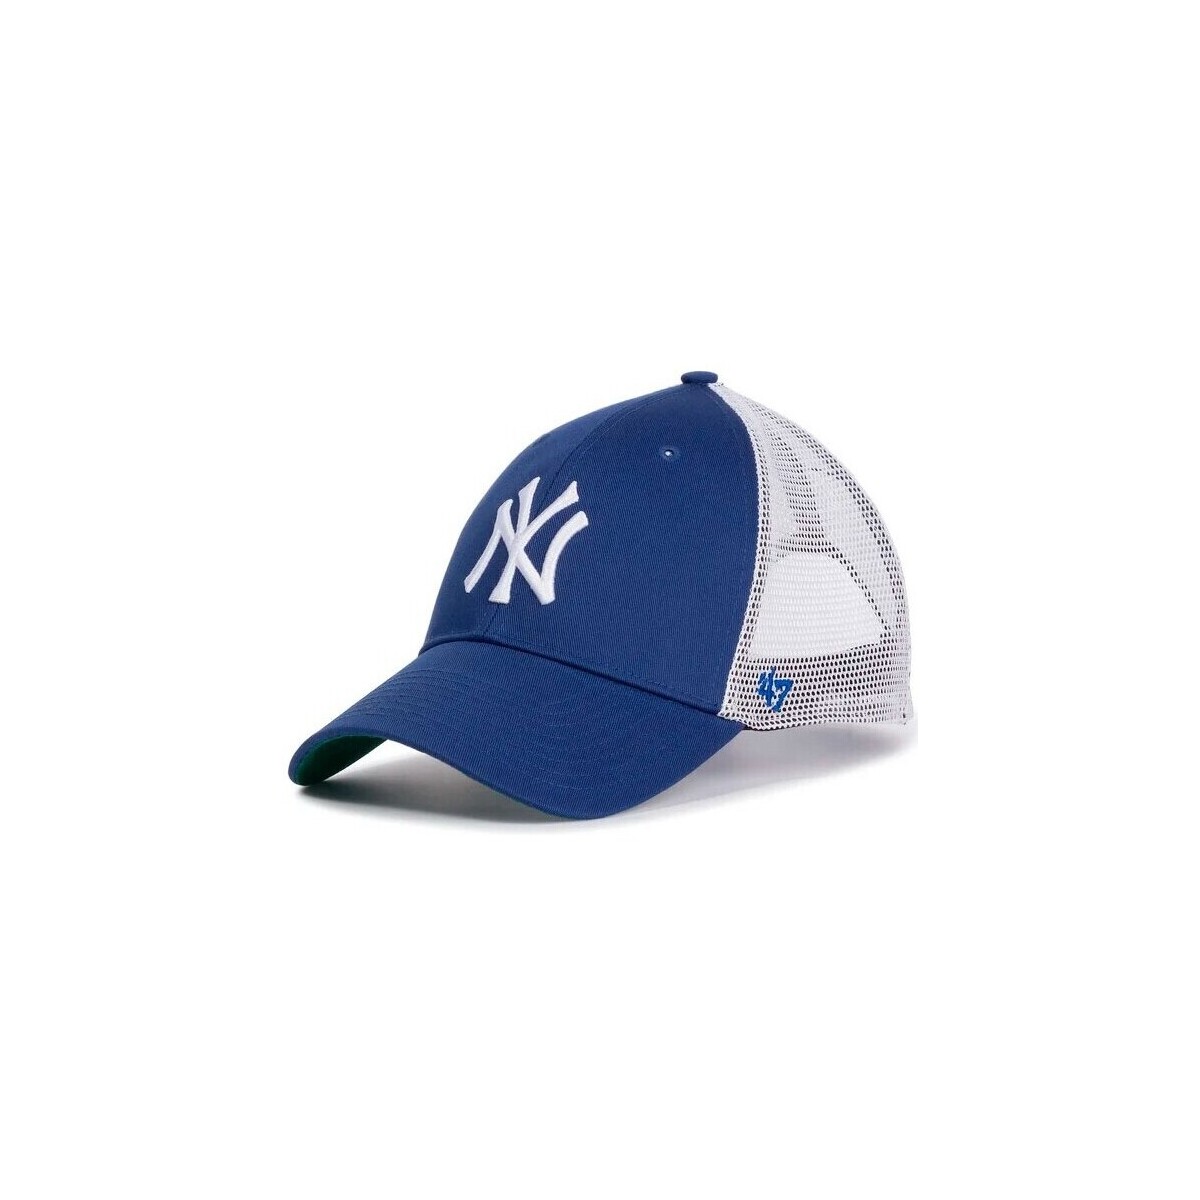 Accesorios textil Niños Gorra Brand 47 NY Yankees Azul